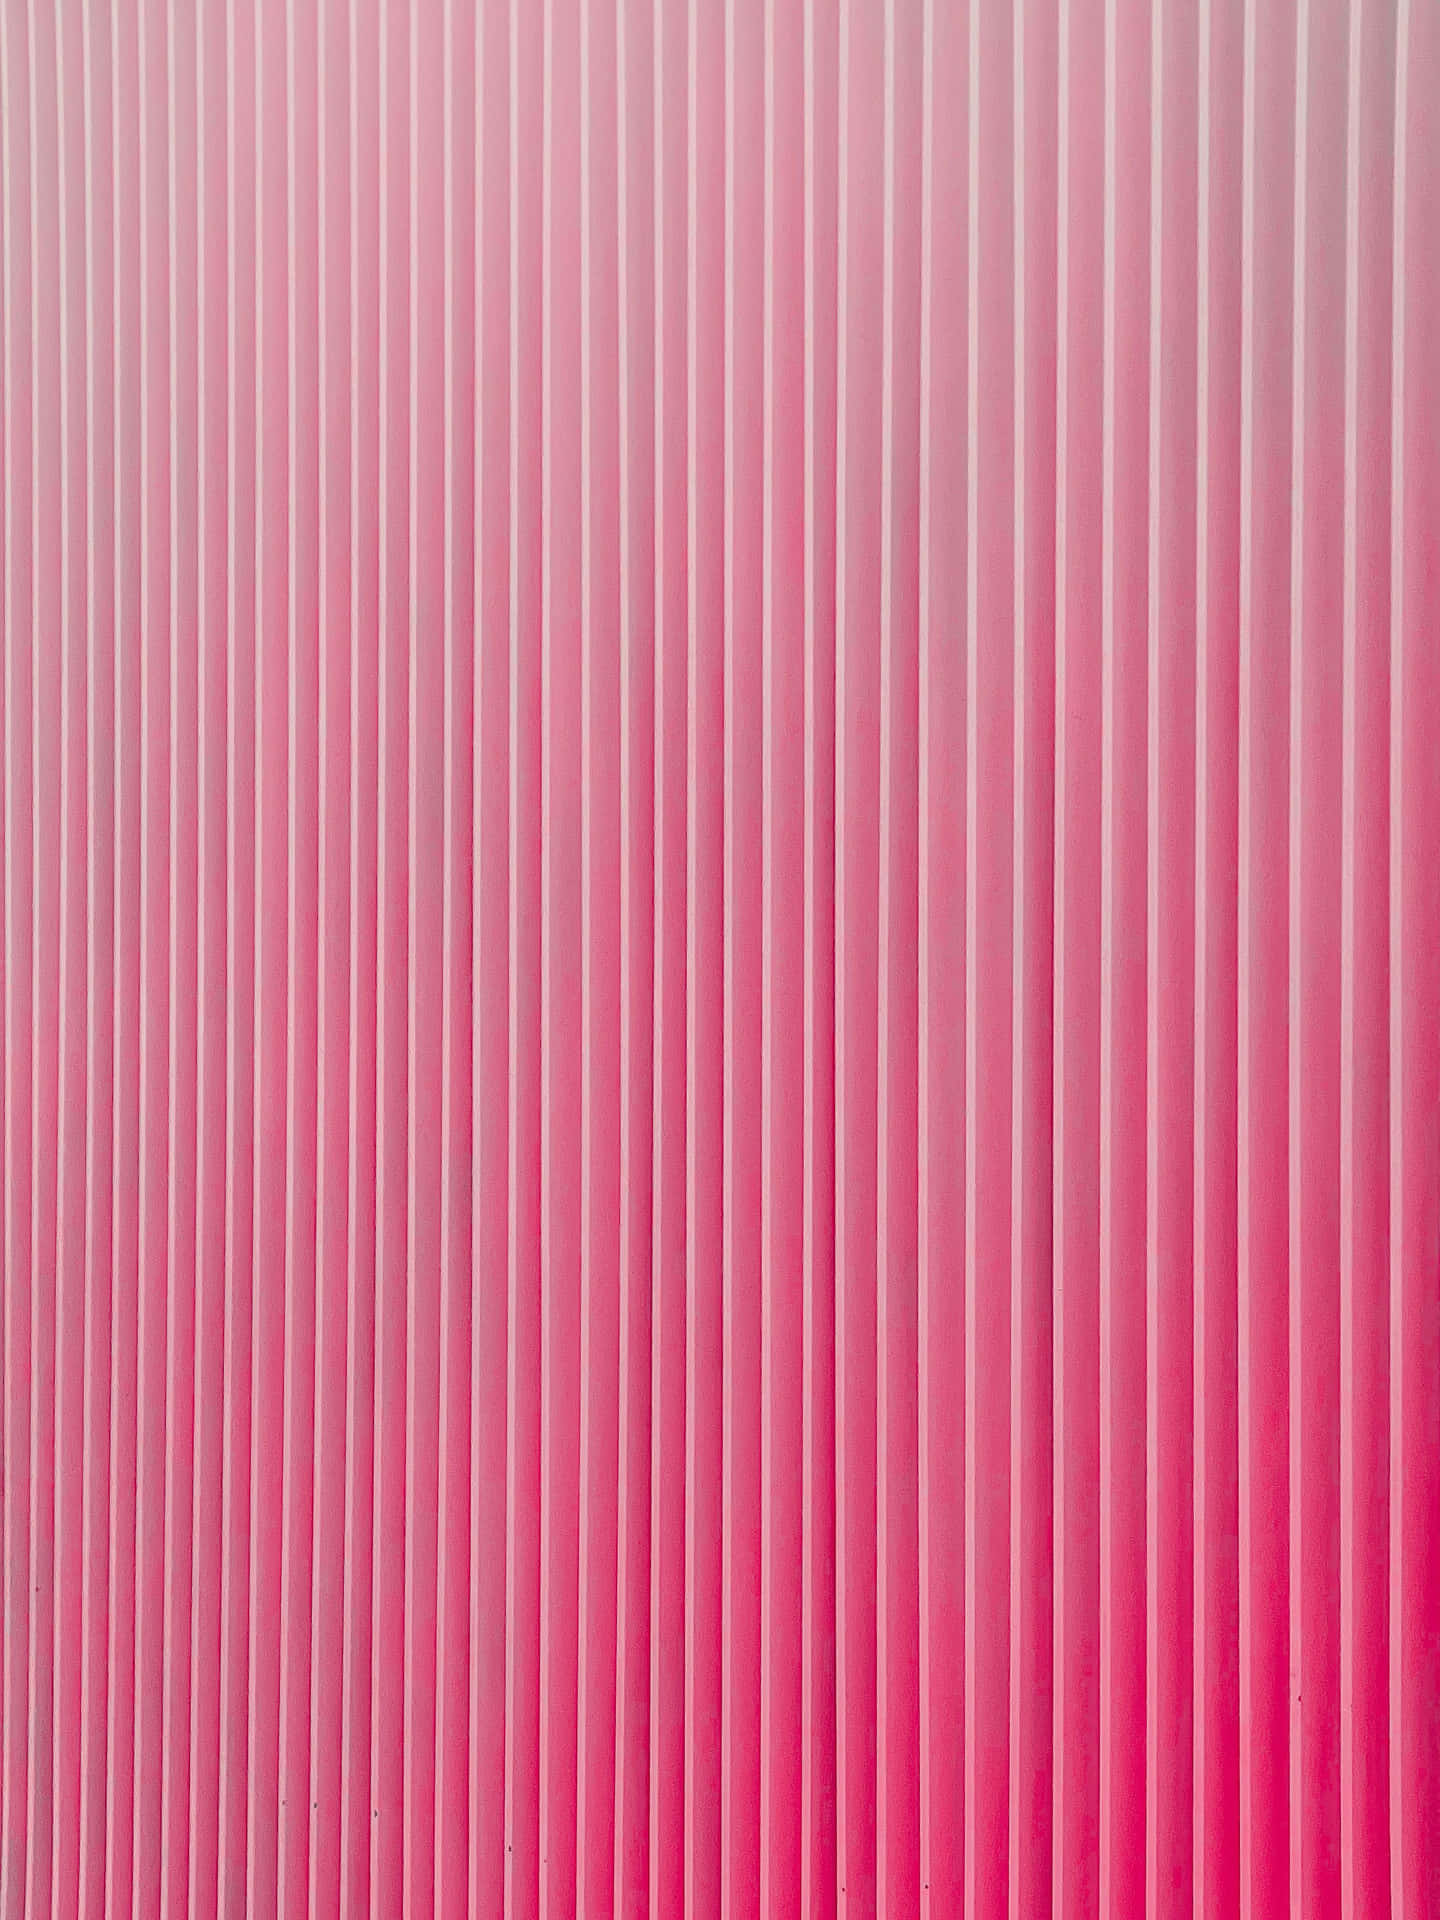 Pink Ombre Vertical Lines Wallpaper